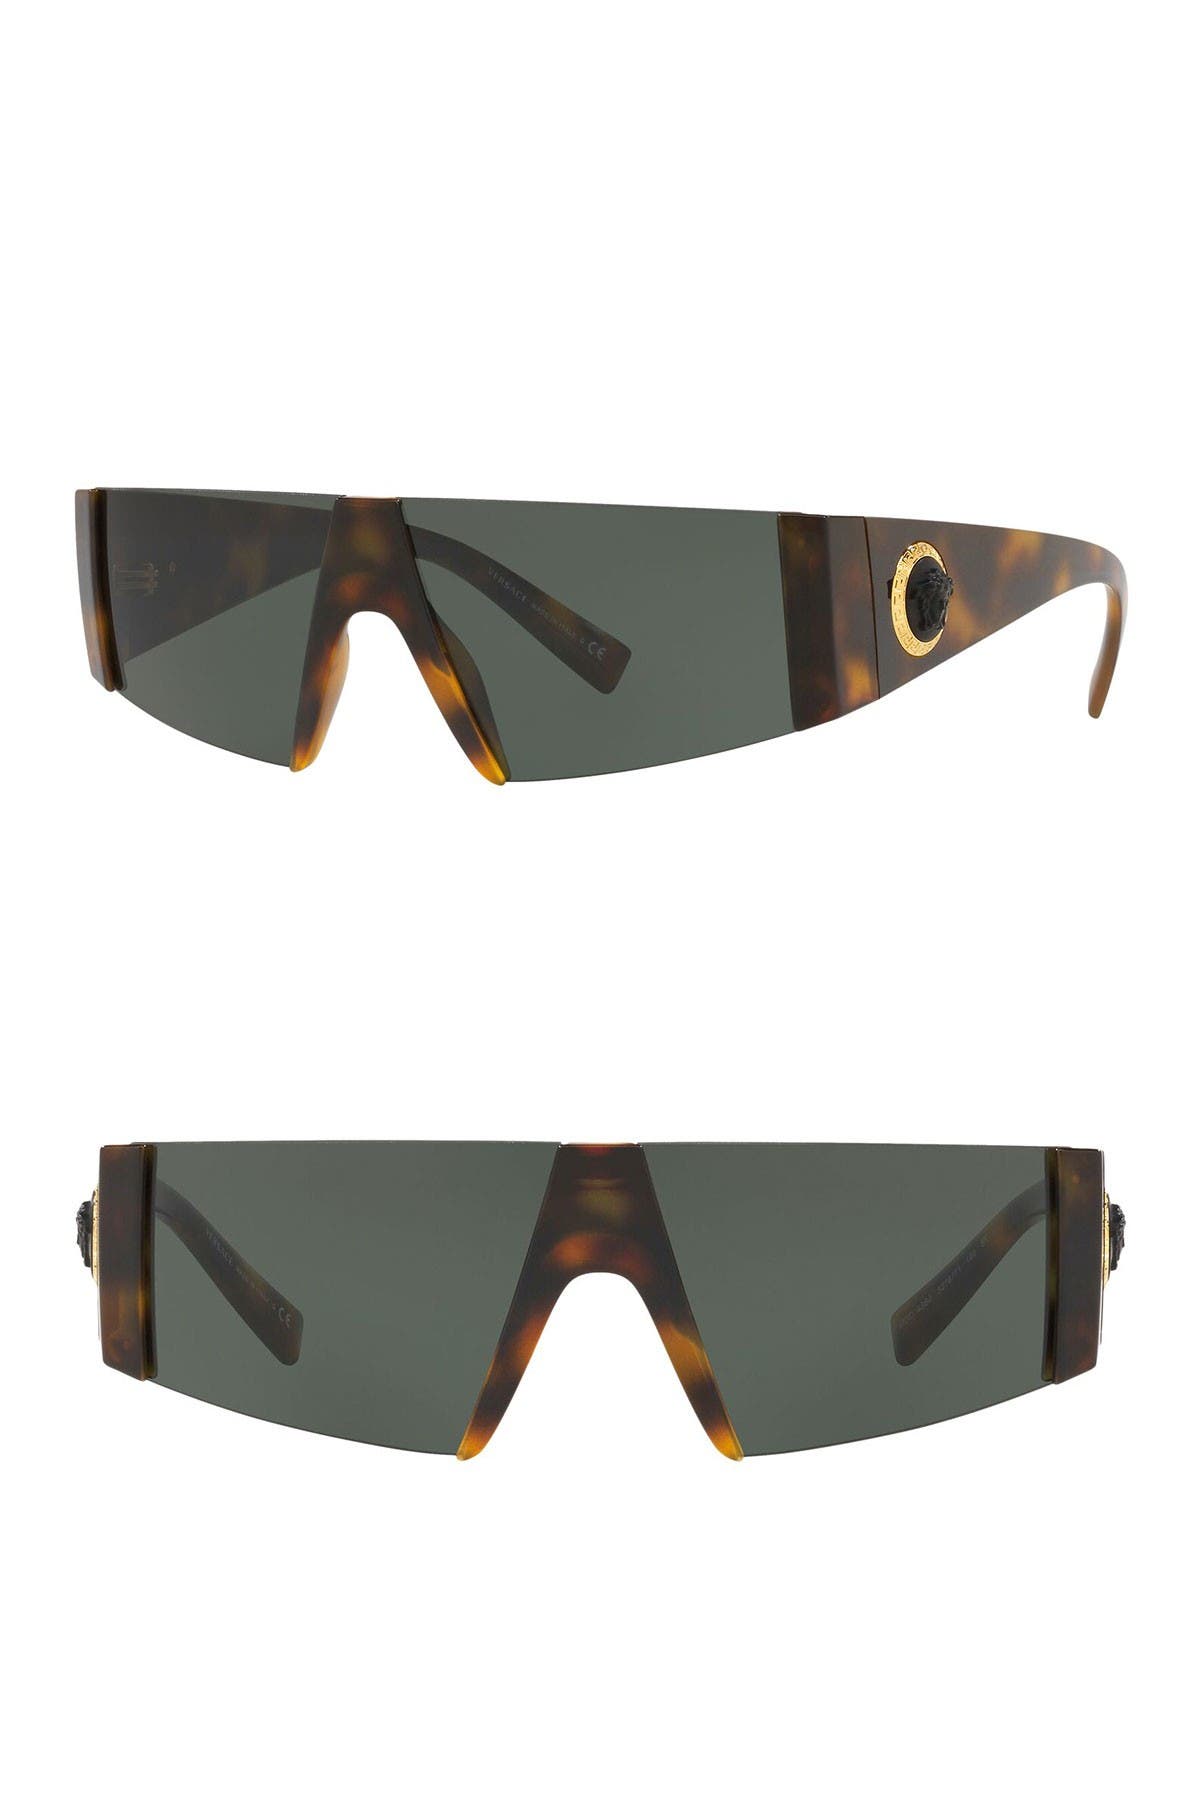 versace sunglasses nordstrom rack